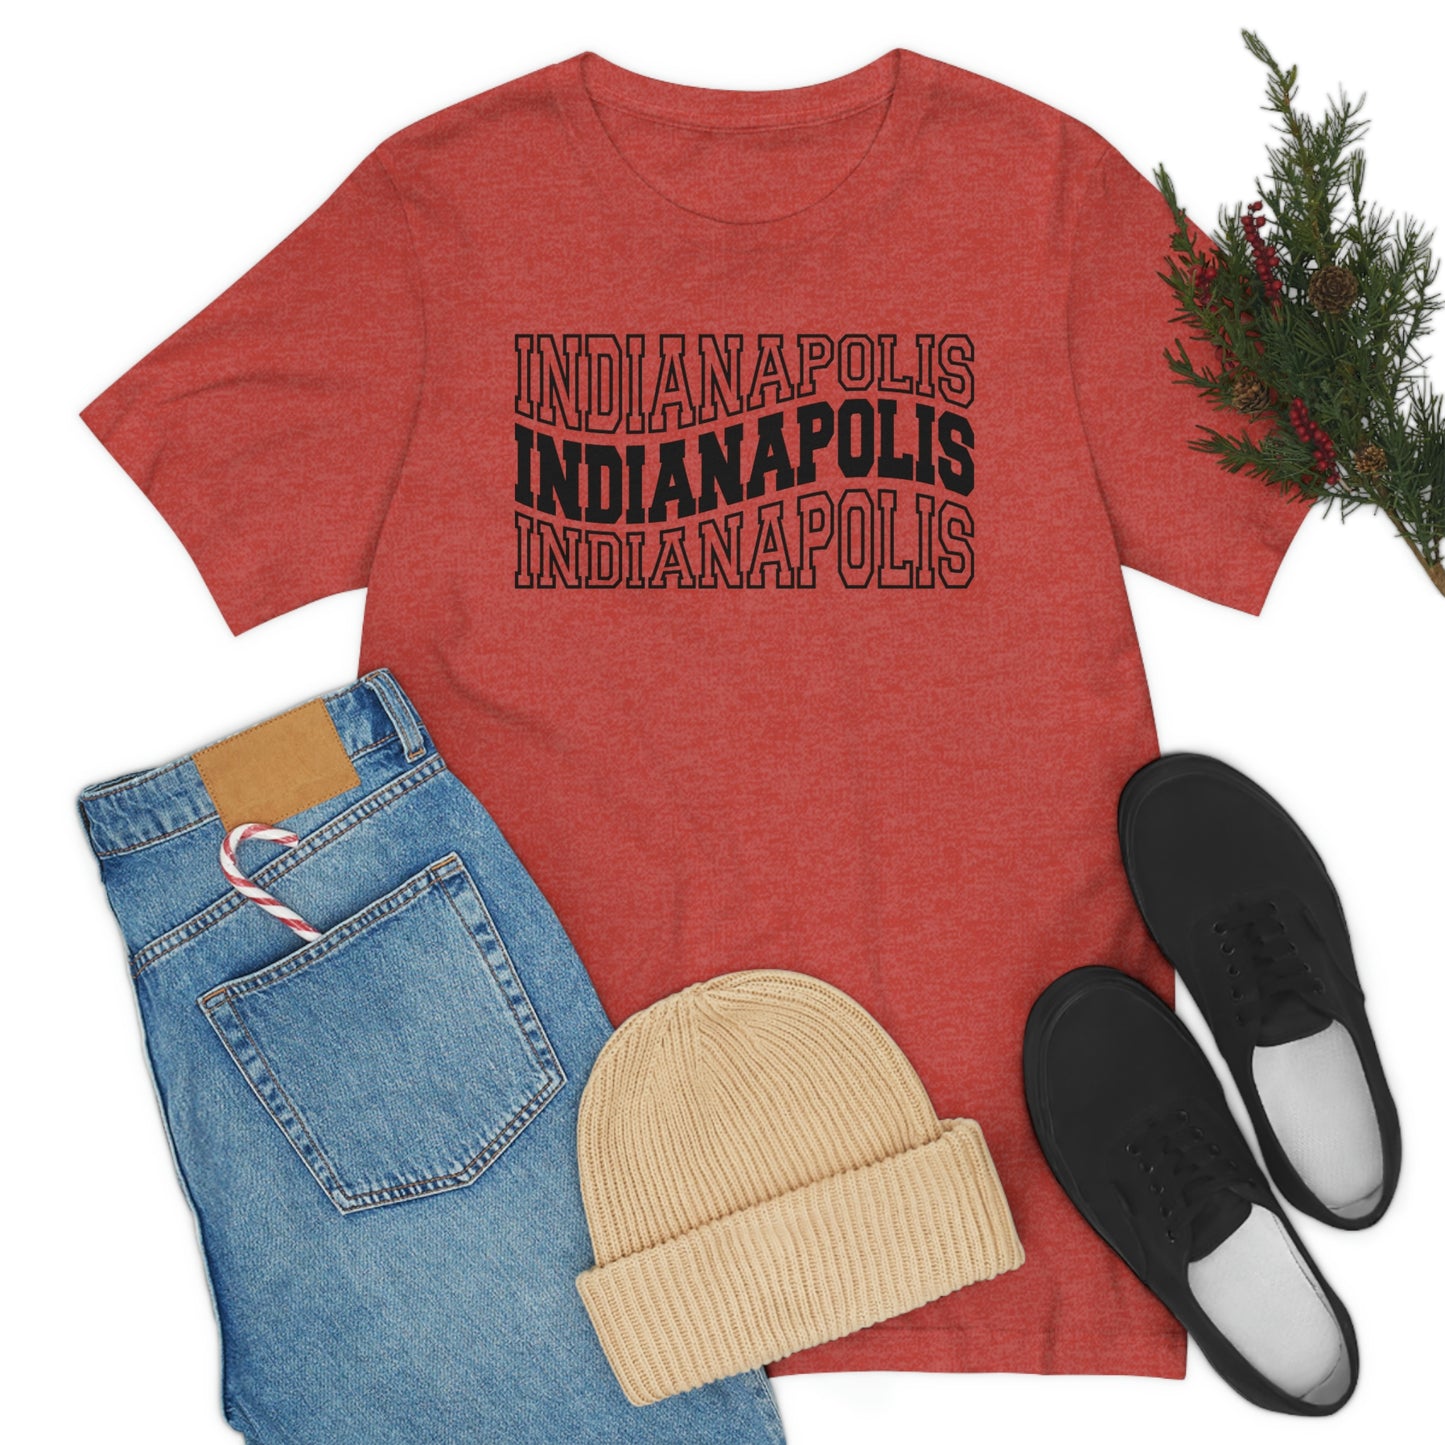 Indianapolis Varsity Letters Wavy Short Sleeve T-shirt